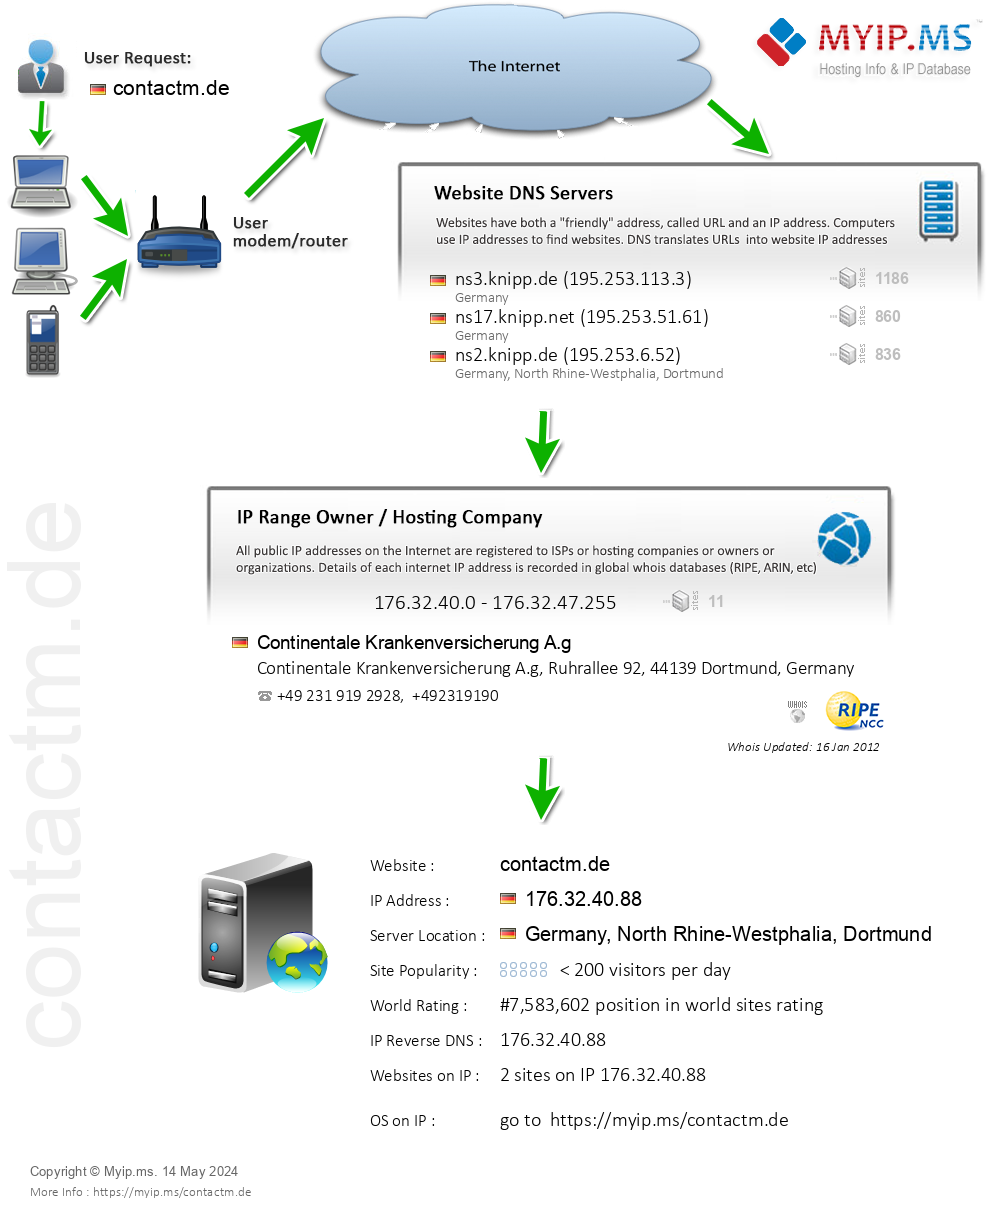 Contactm.de - Website Hosting Visual IP Diagram